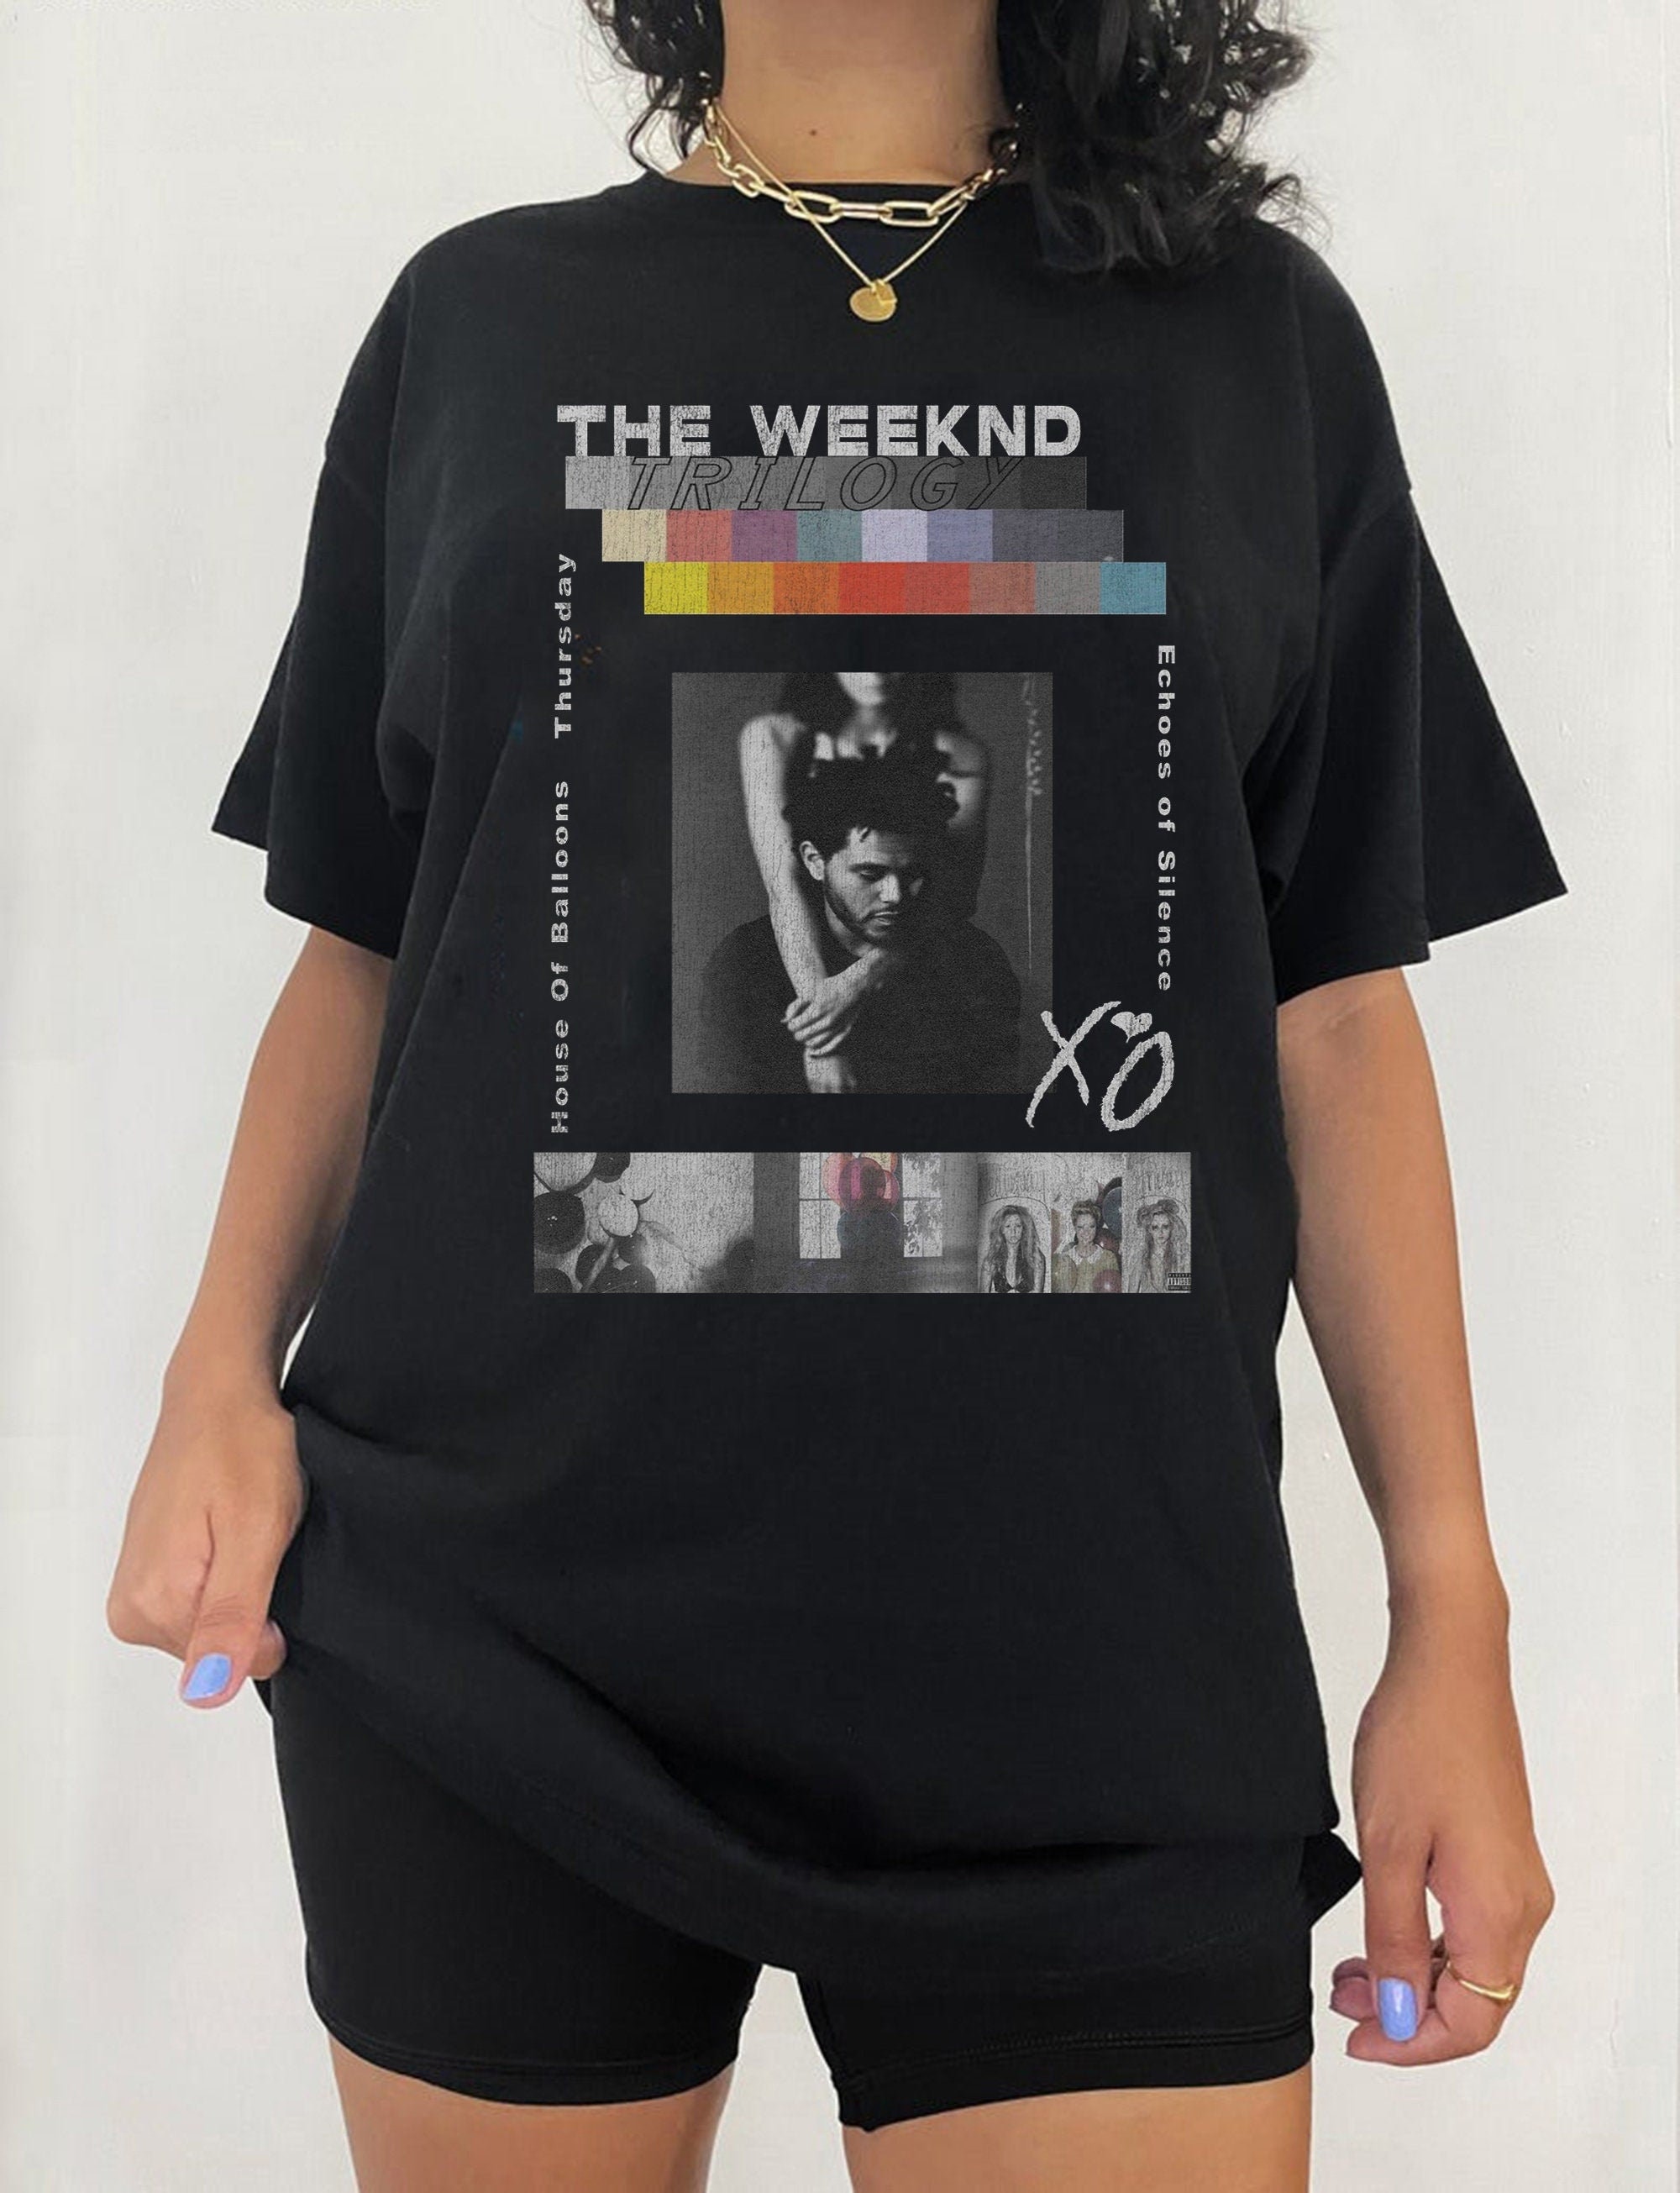 The Weeknd Starboy XO Long Sleeve Tour Merch Concert Tee Unisex Adult  Medium